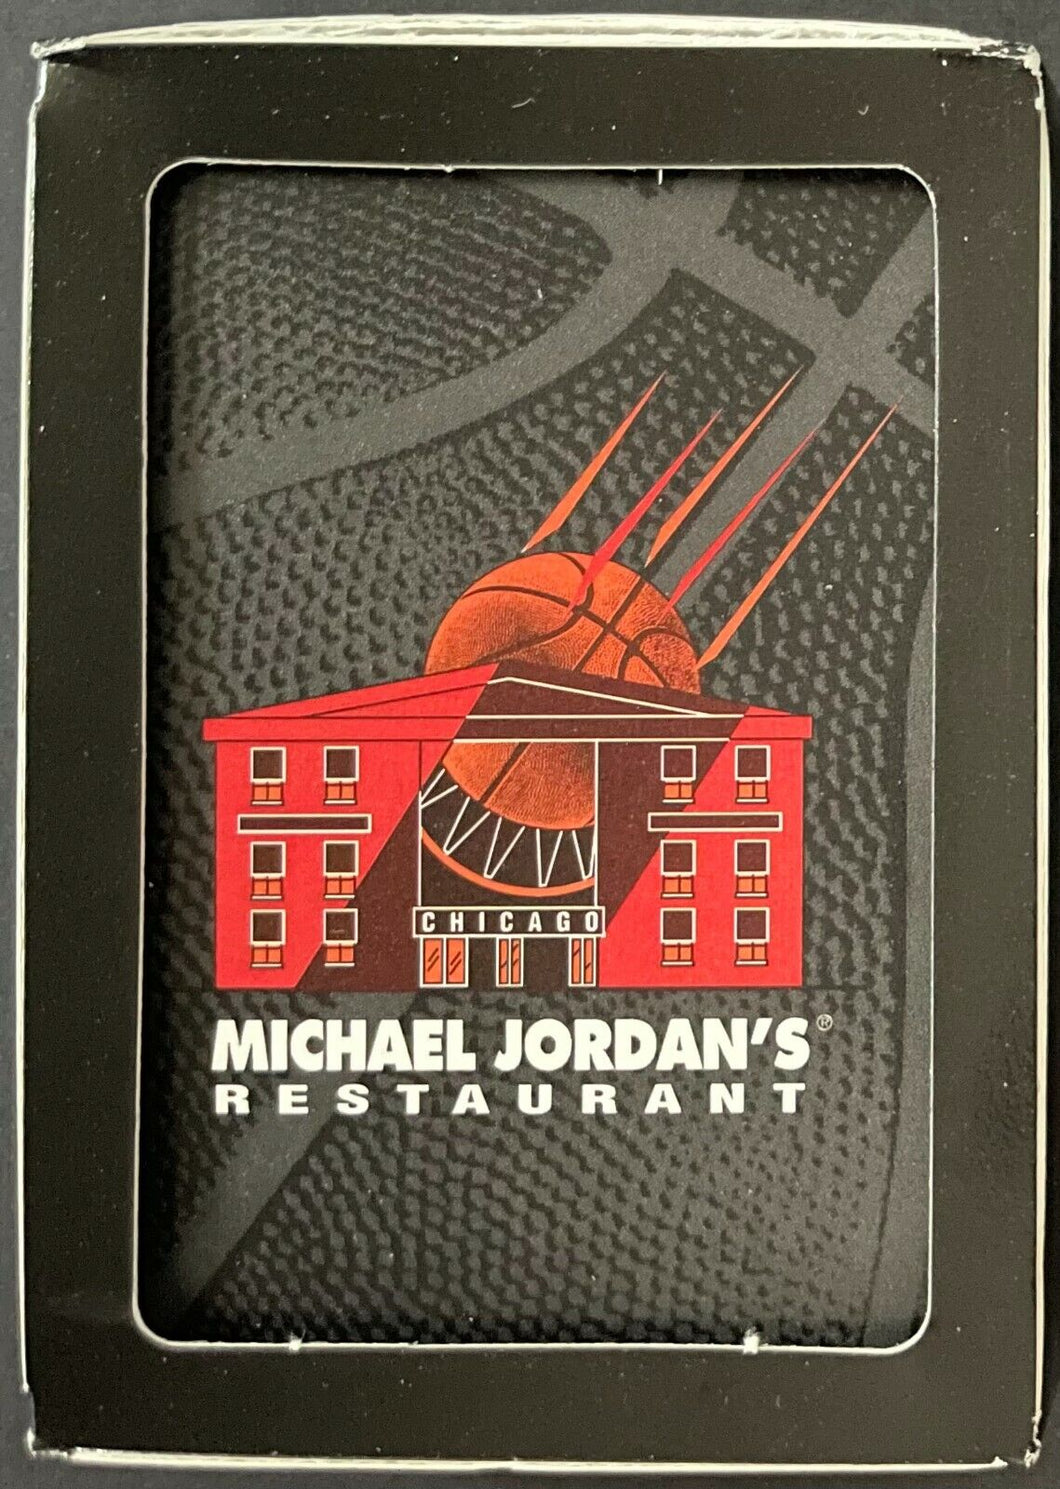 Chicago Bulls NBA Basketball Playing Cards Michael Jordan Restaurant